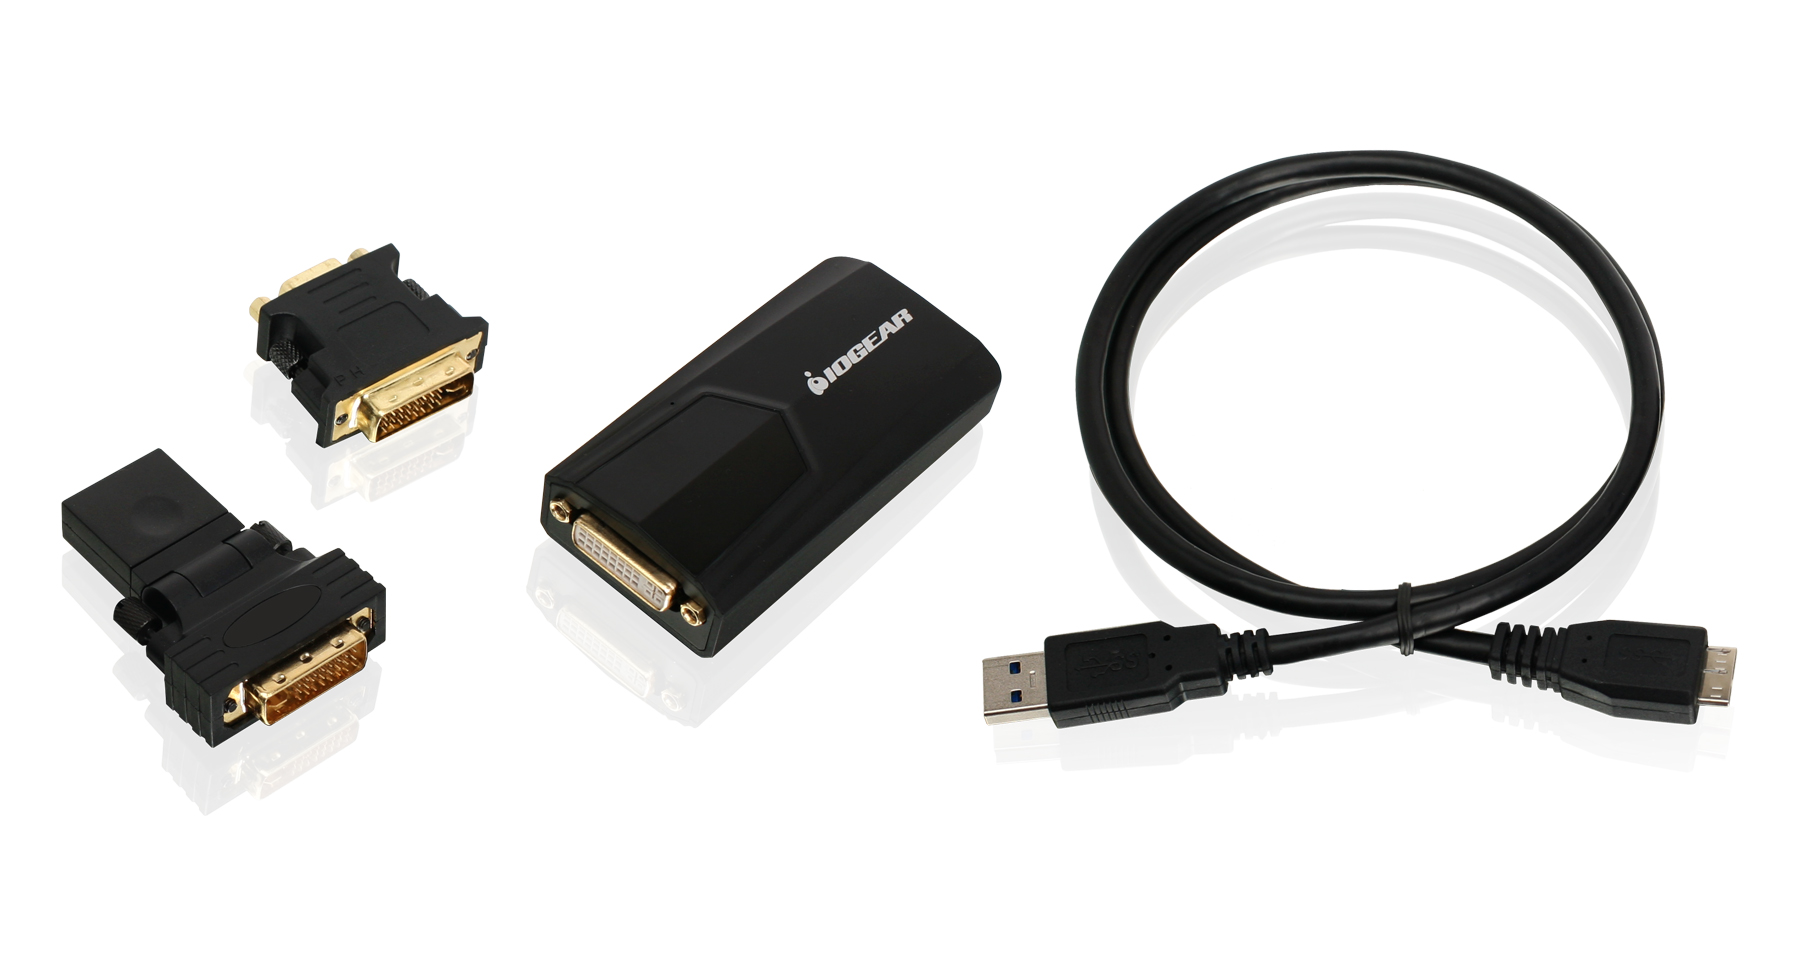 Seraph smag Lima IOGEAR - GUC3020DW6 - USB 3.0 to DVI/HDMI/VGA External Video Card